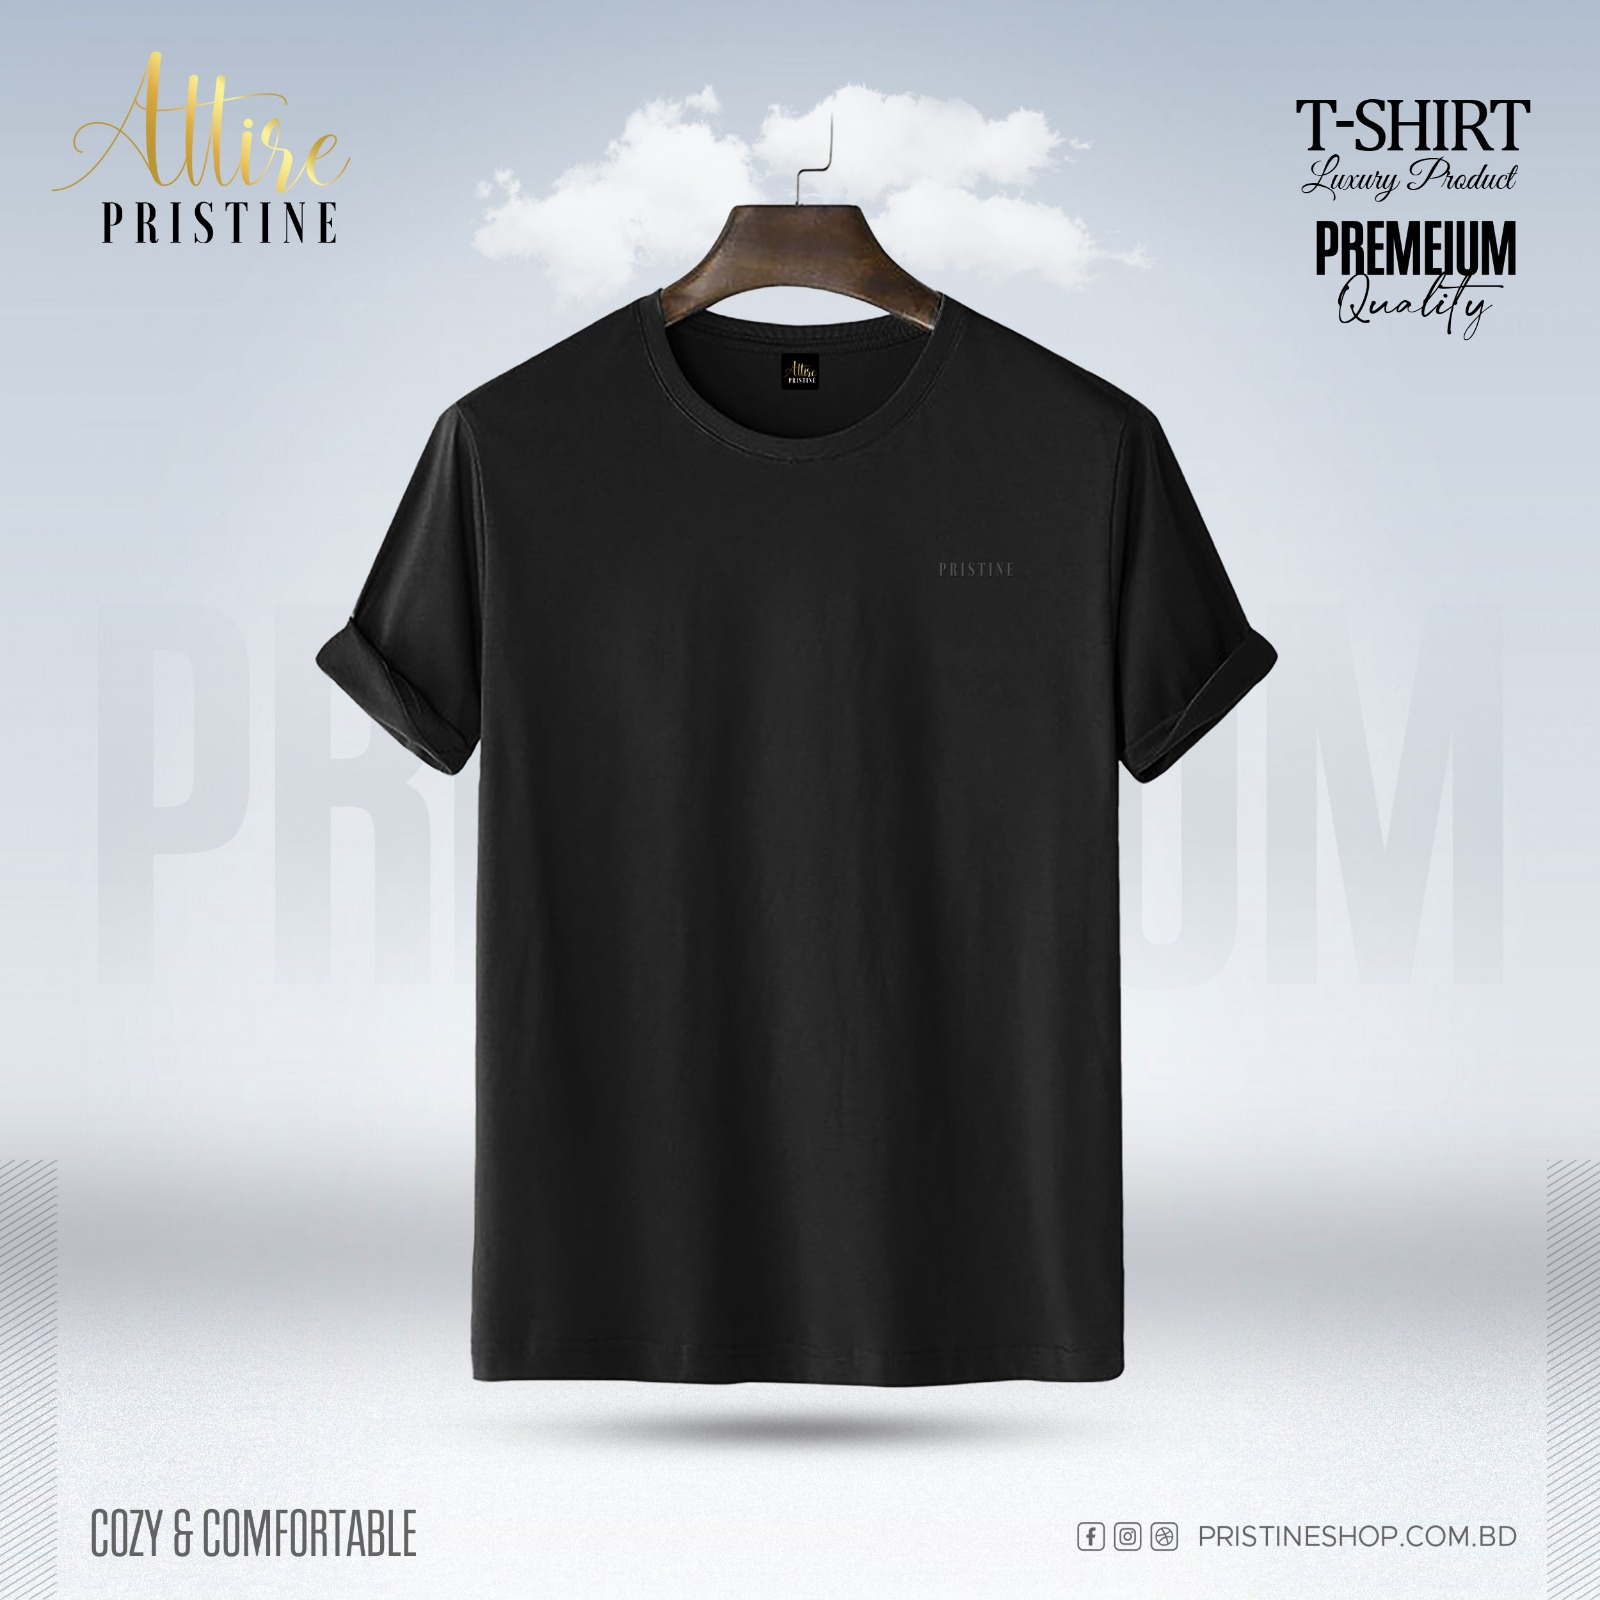 Pristine Premium Attire Solid T-shirt - Black